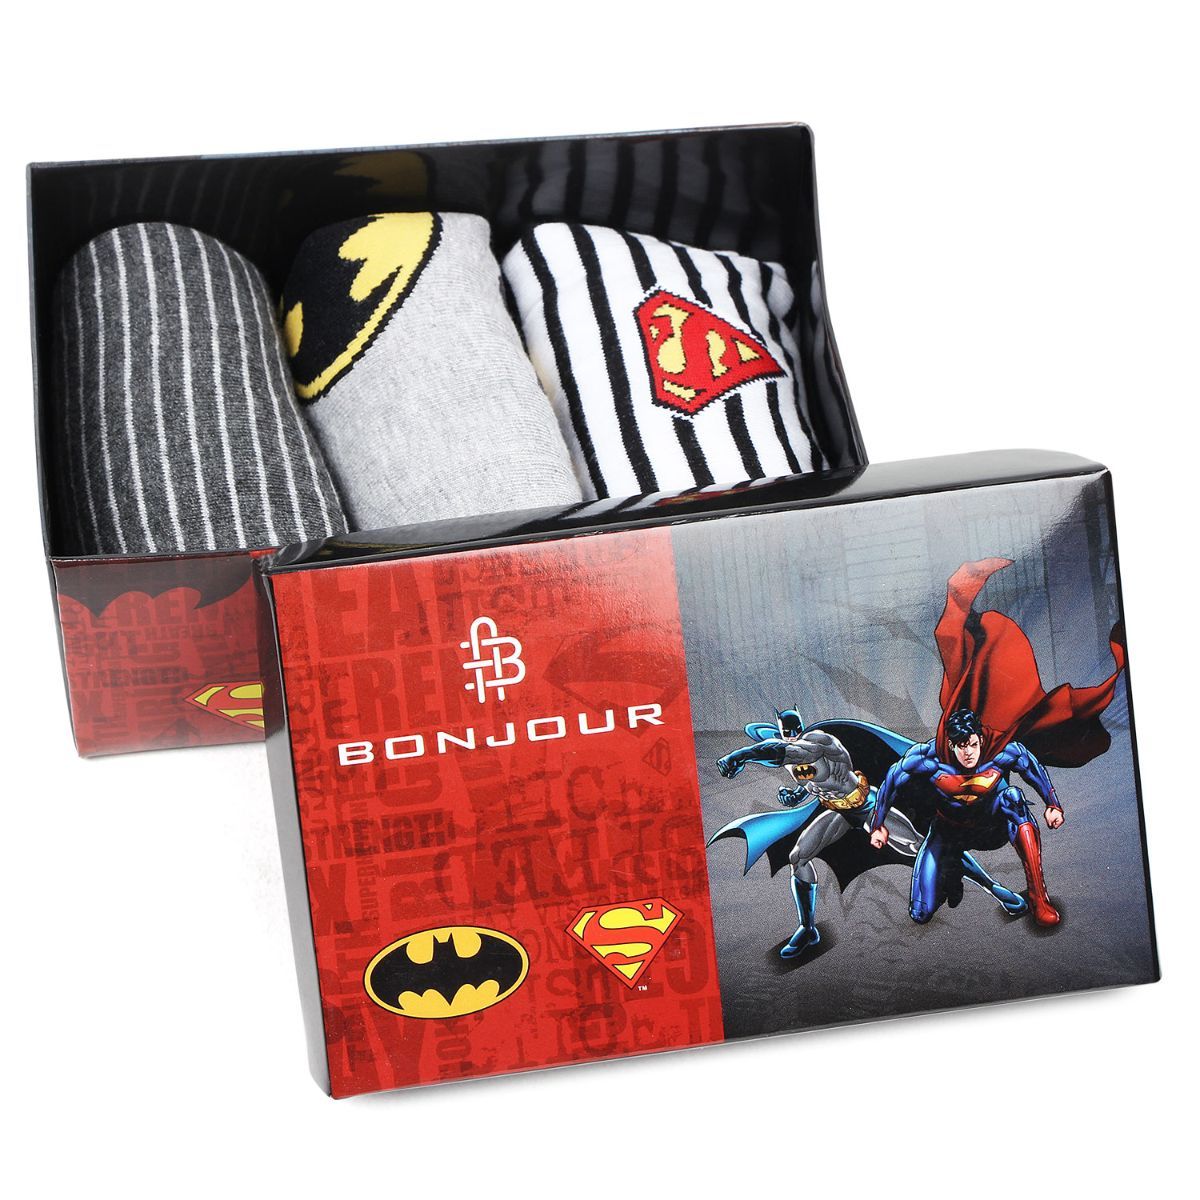 Bonjour Men's Superman Batman Ankle Socks - Pack Of 3 - Multi-Color (Free Size)